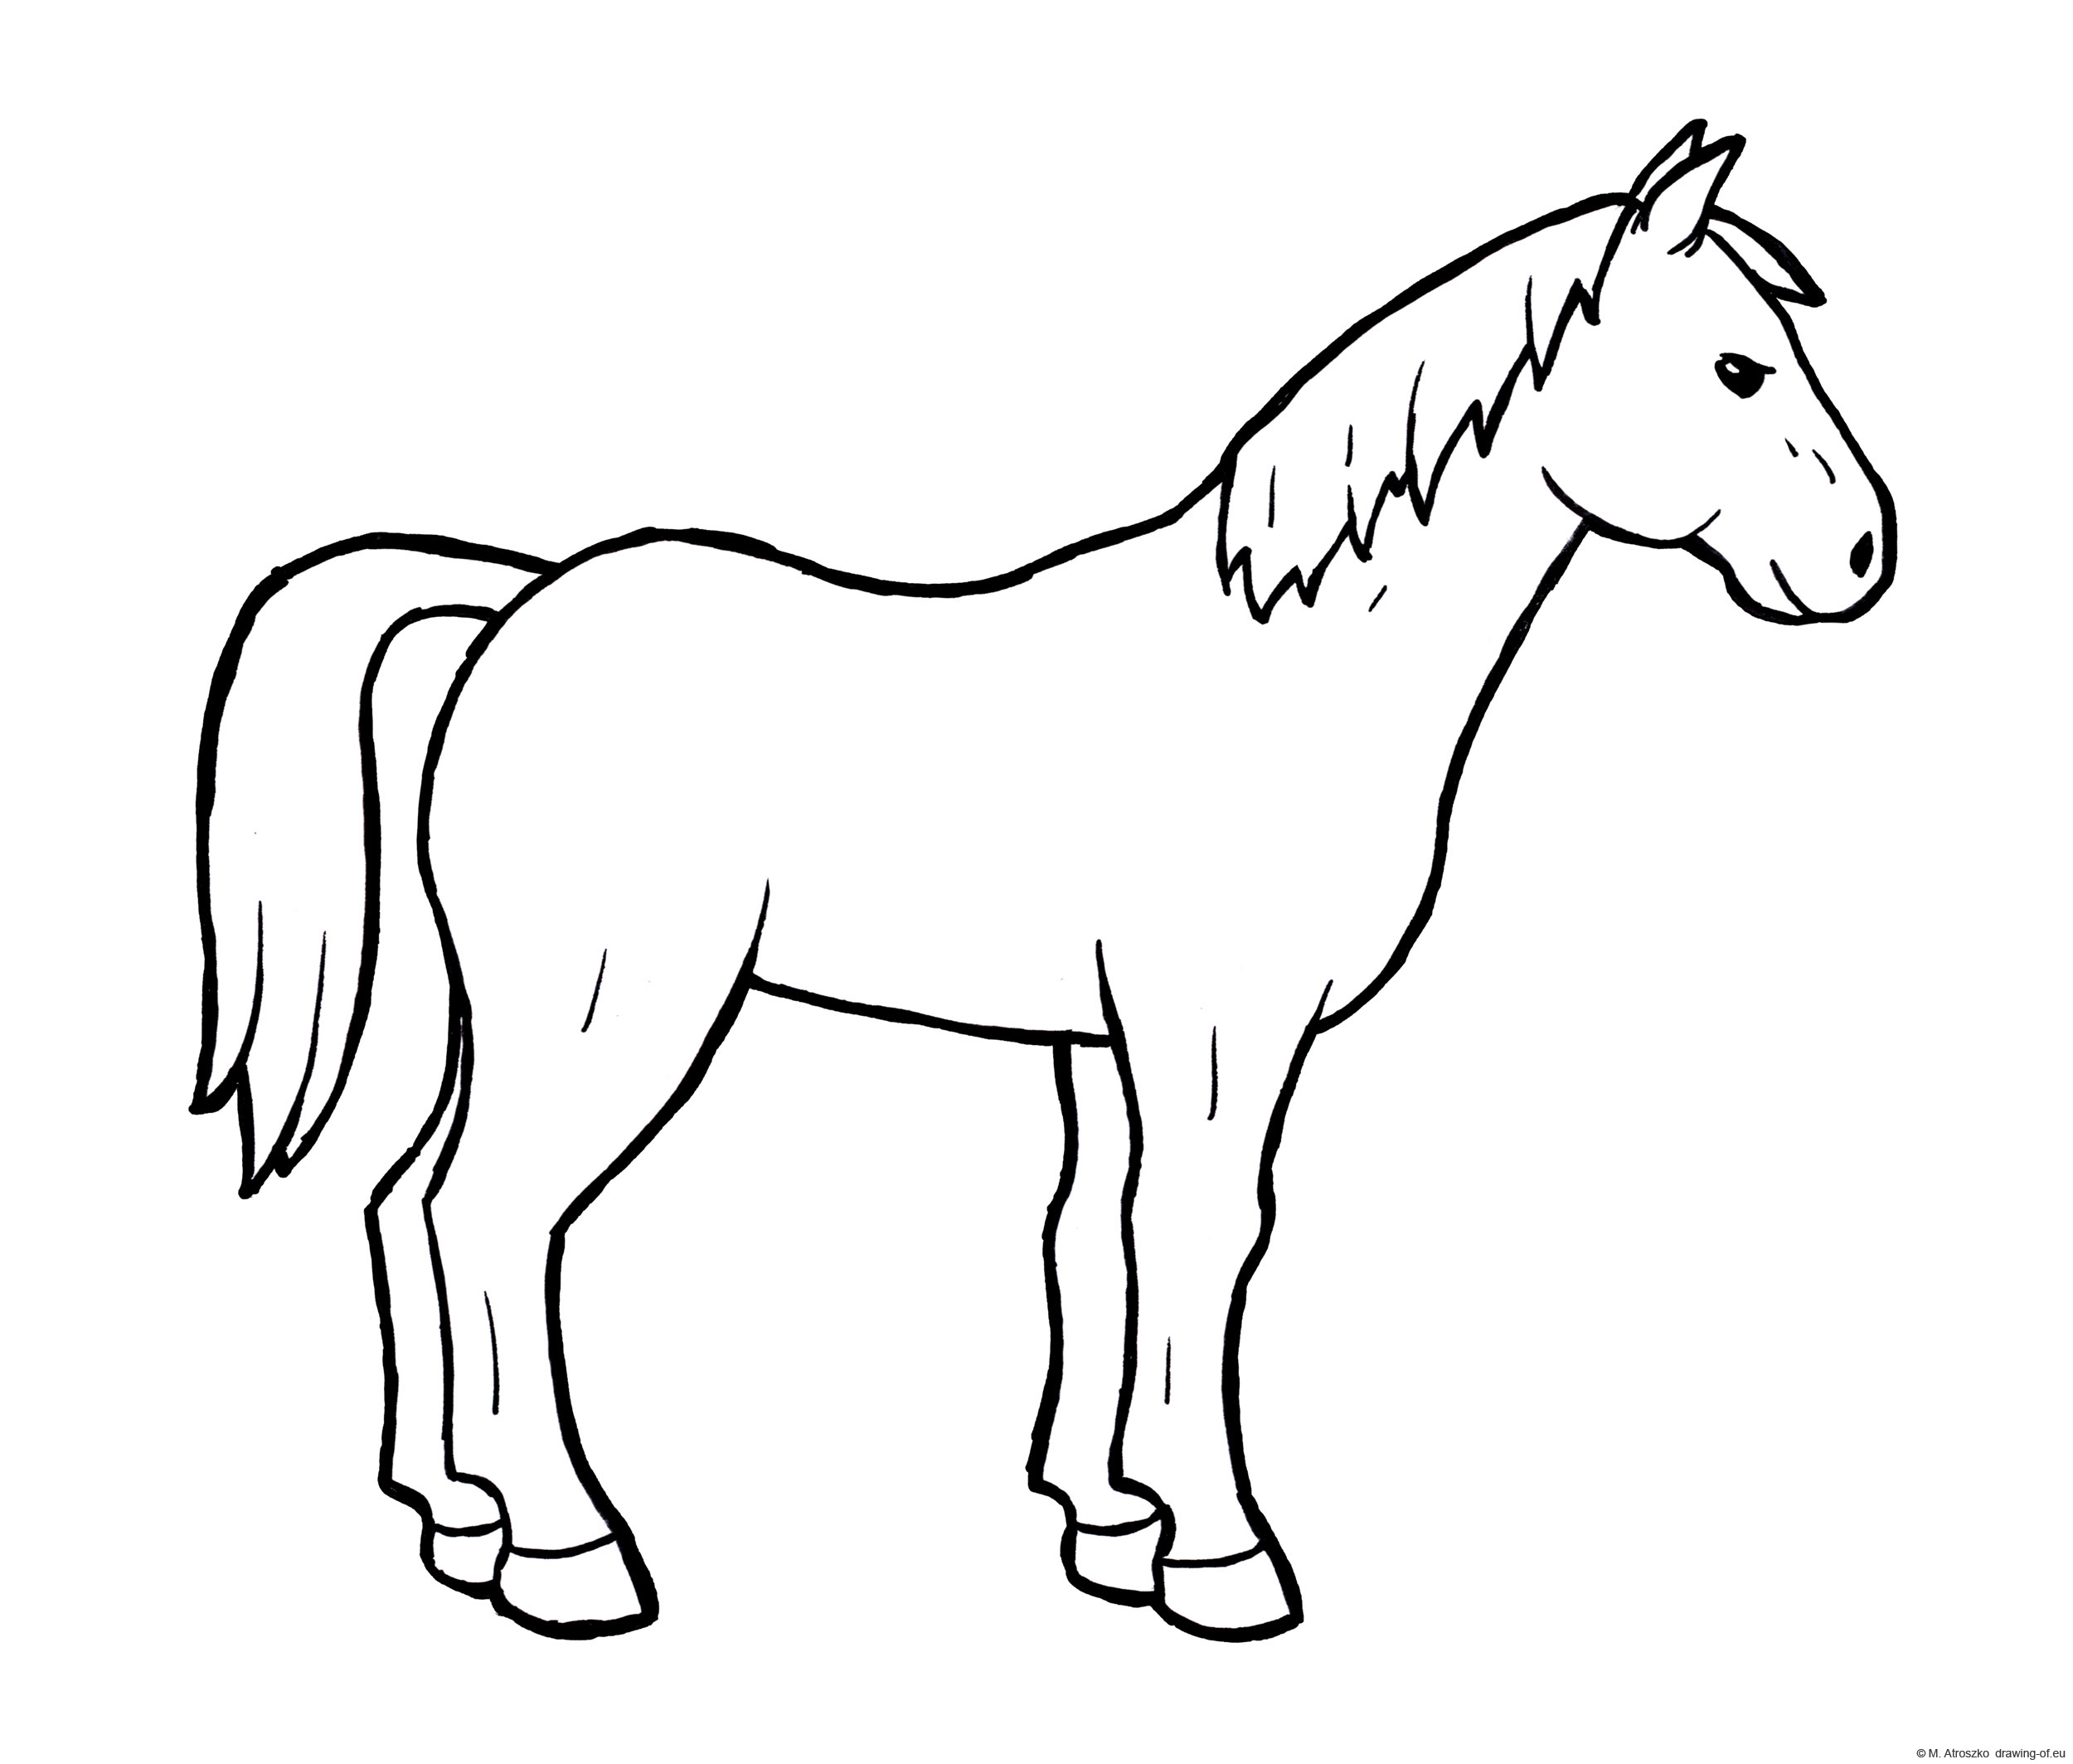 horse simple